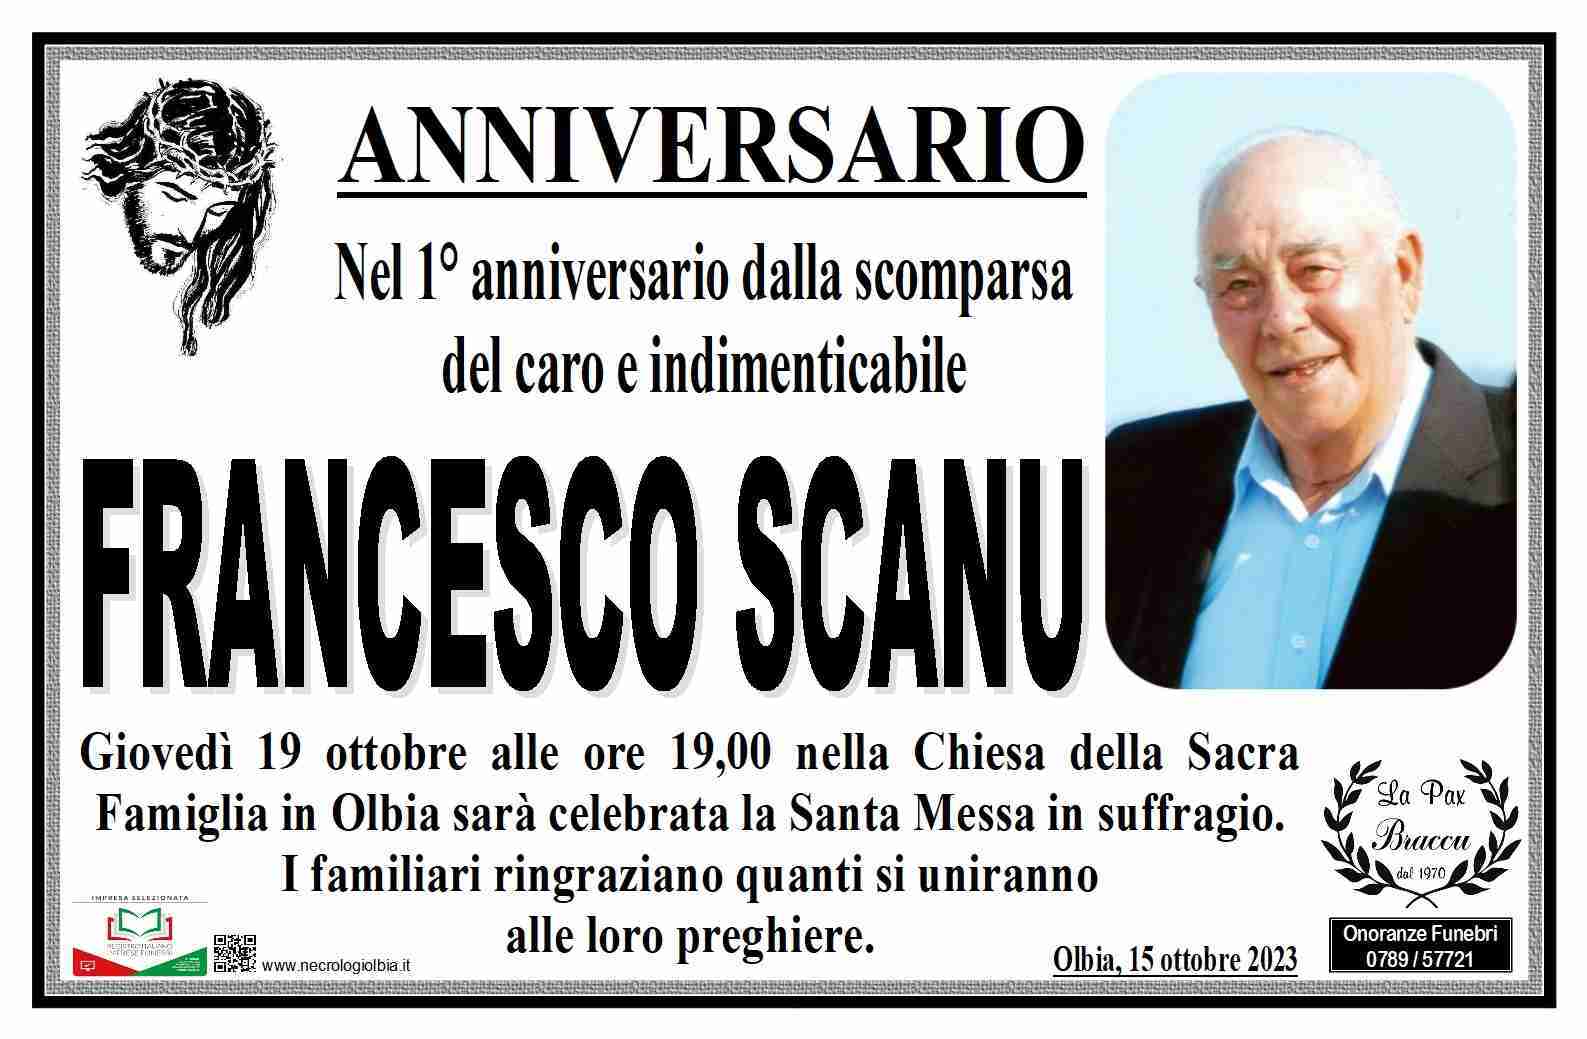 Francesco Scanu